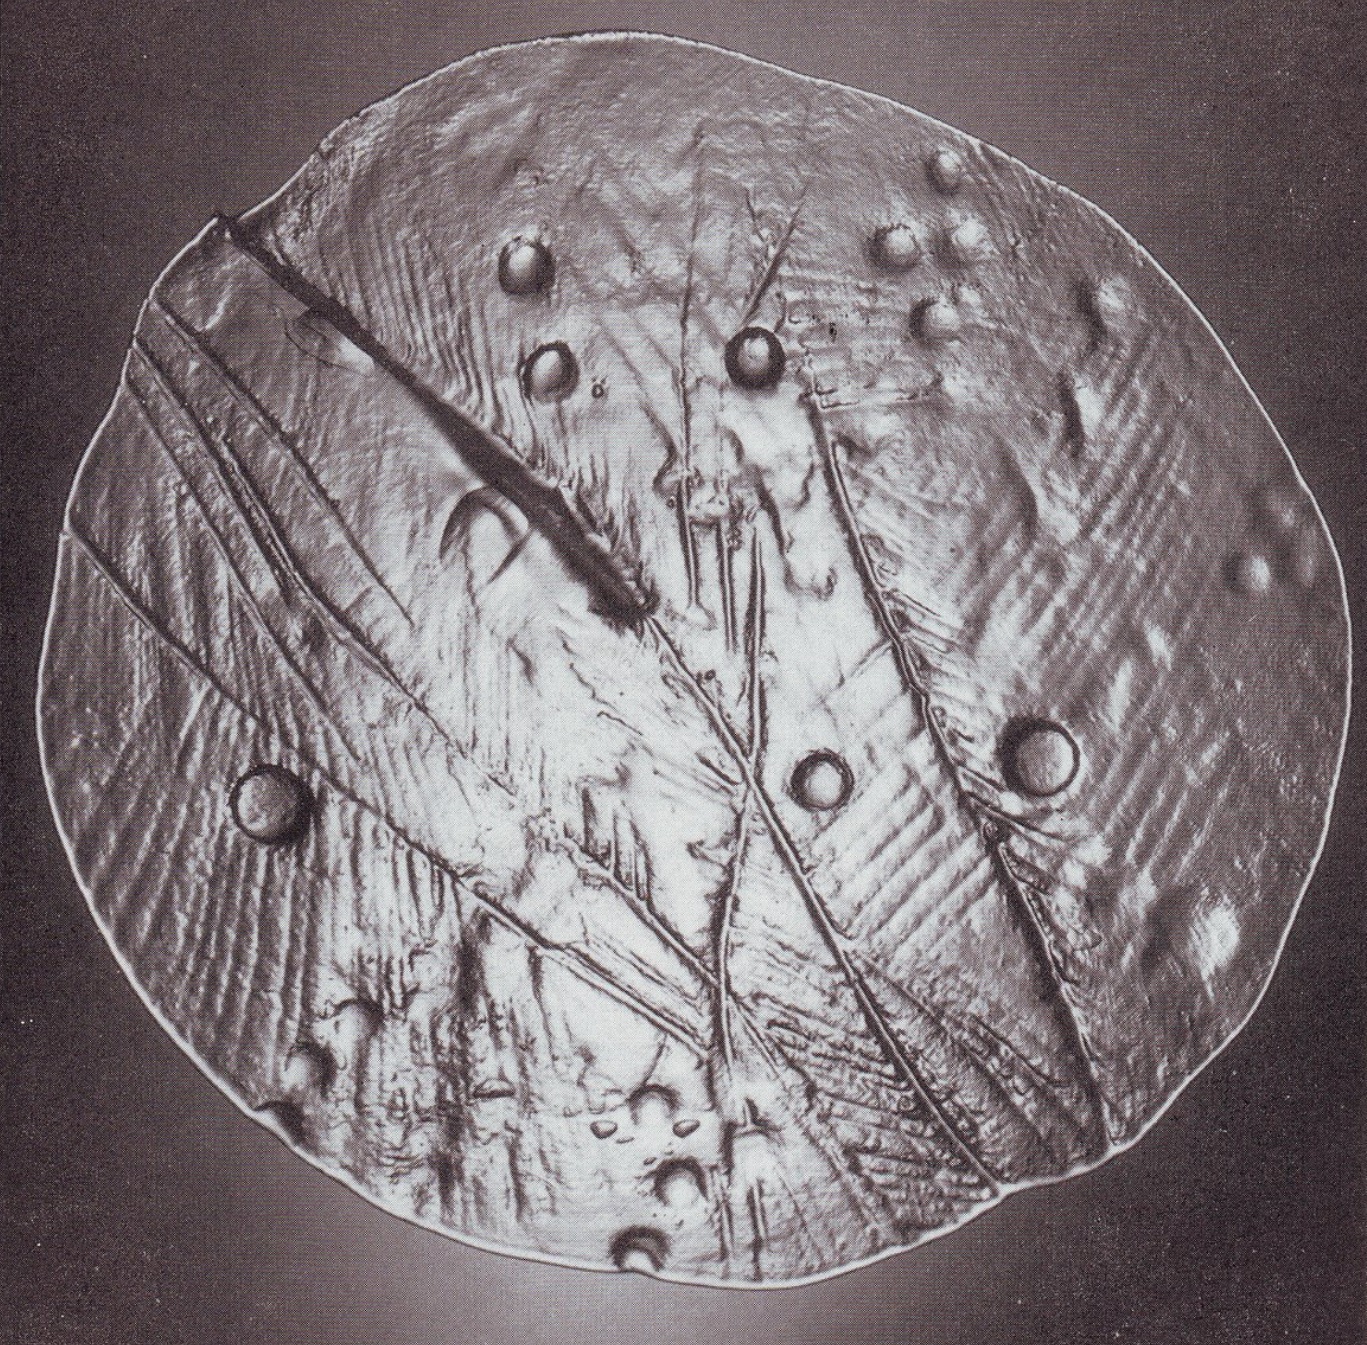 Libochovice - 4911/450, Plate